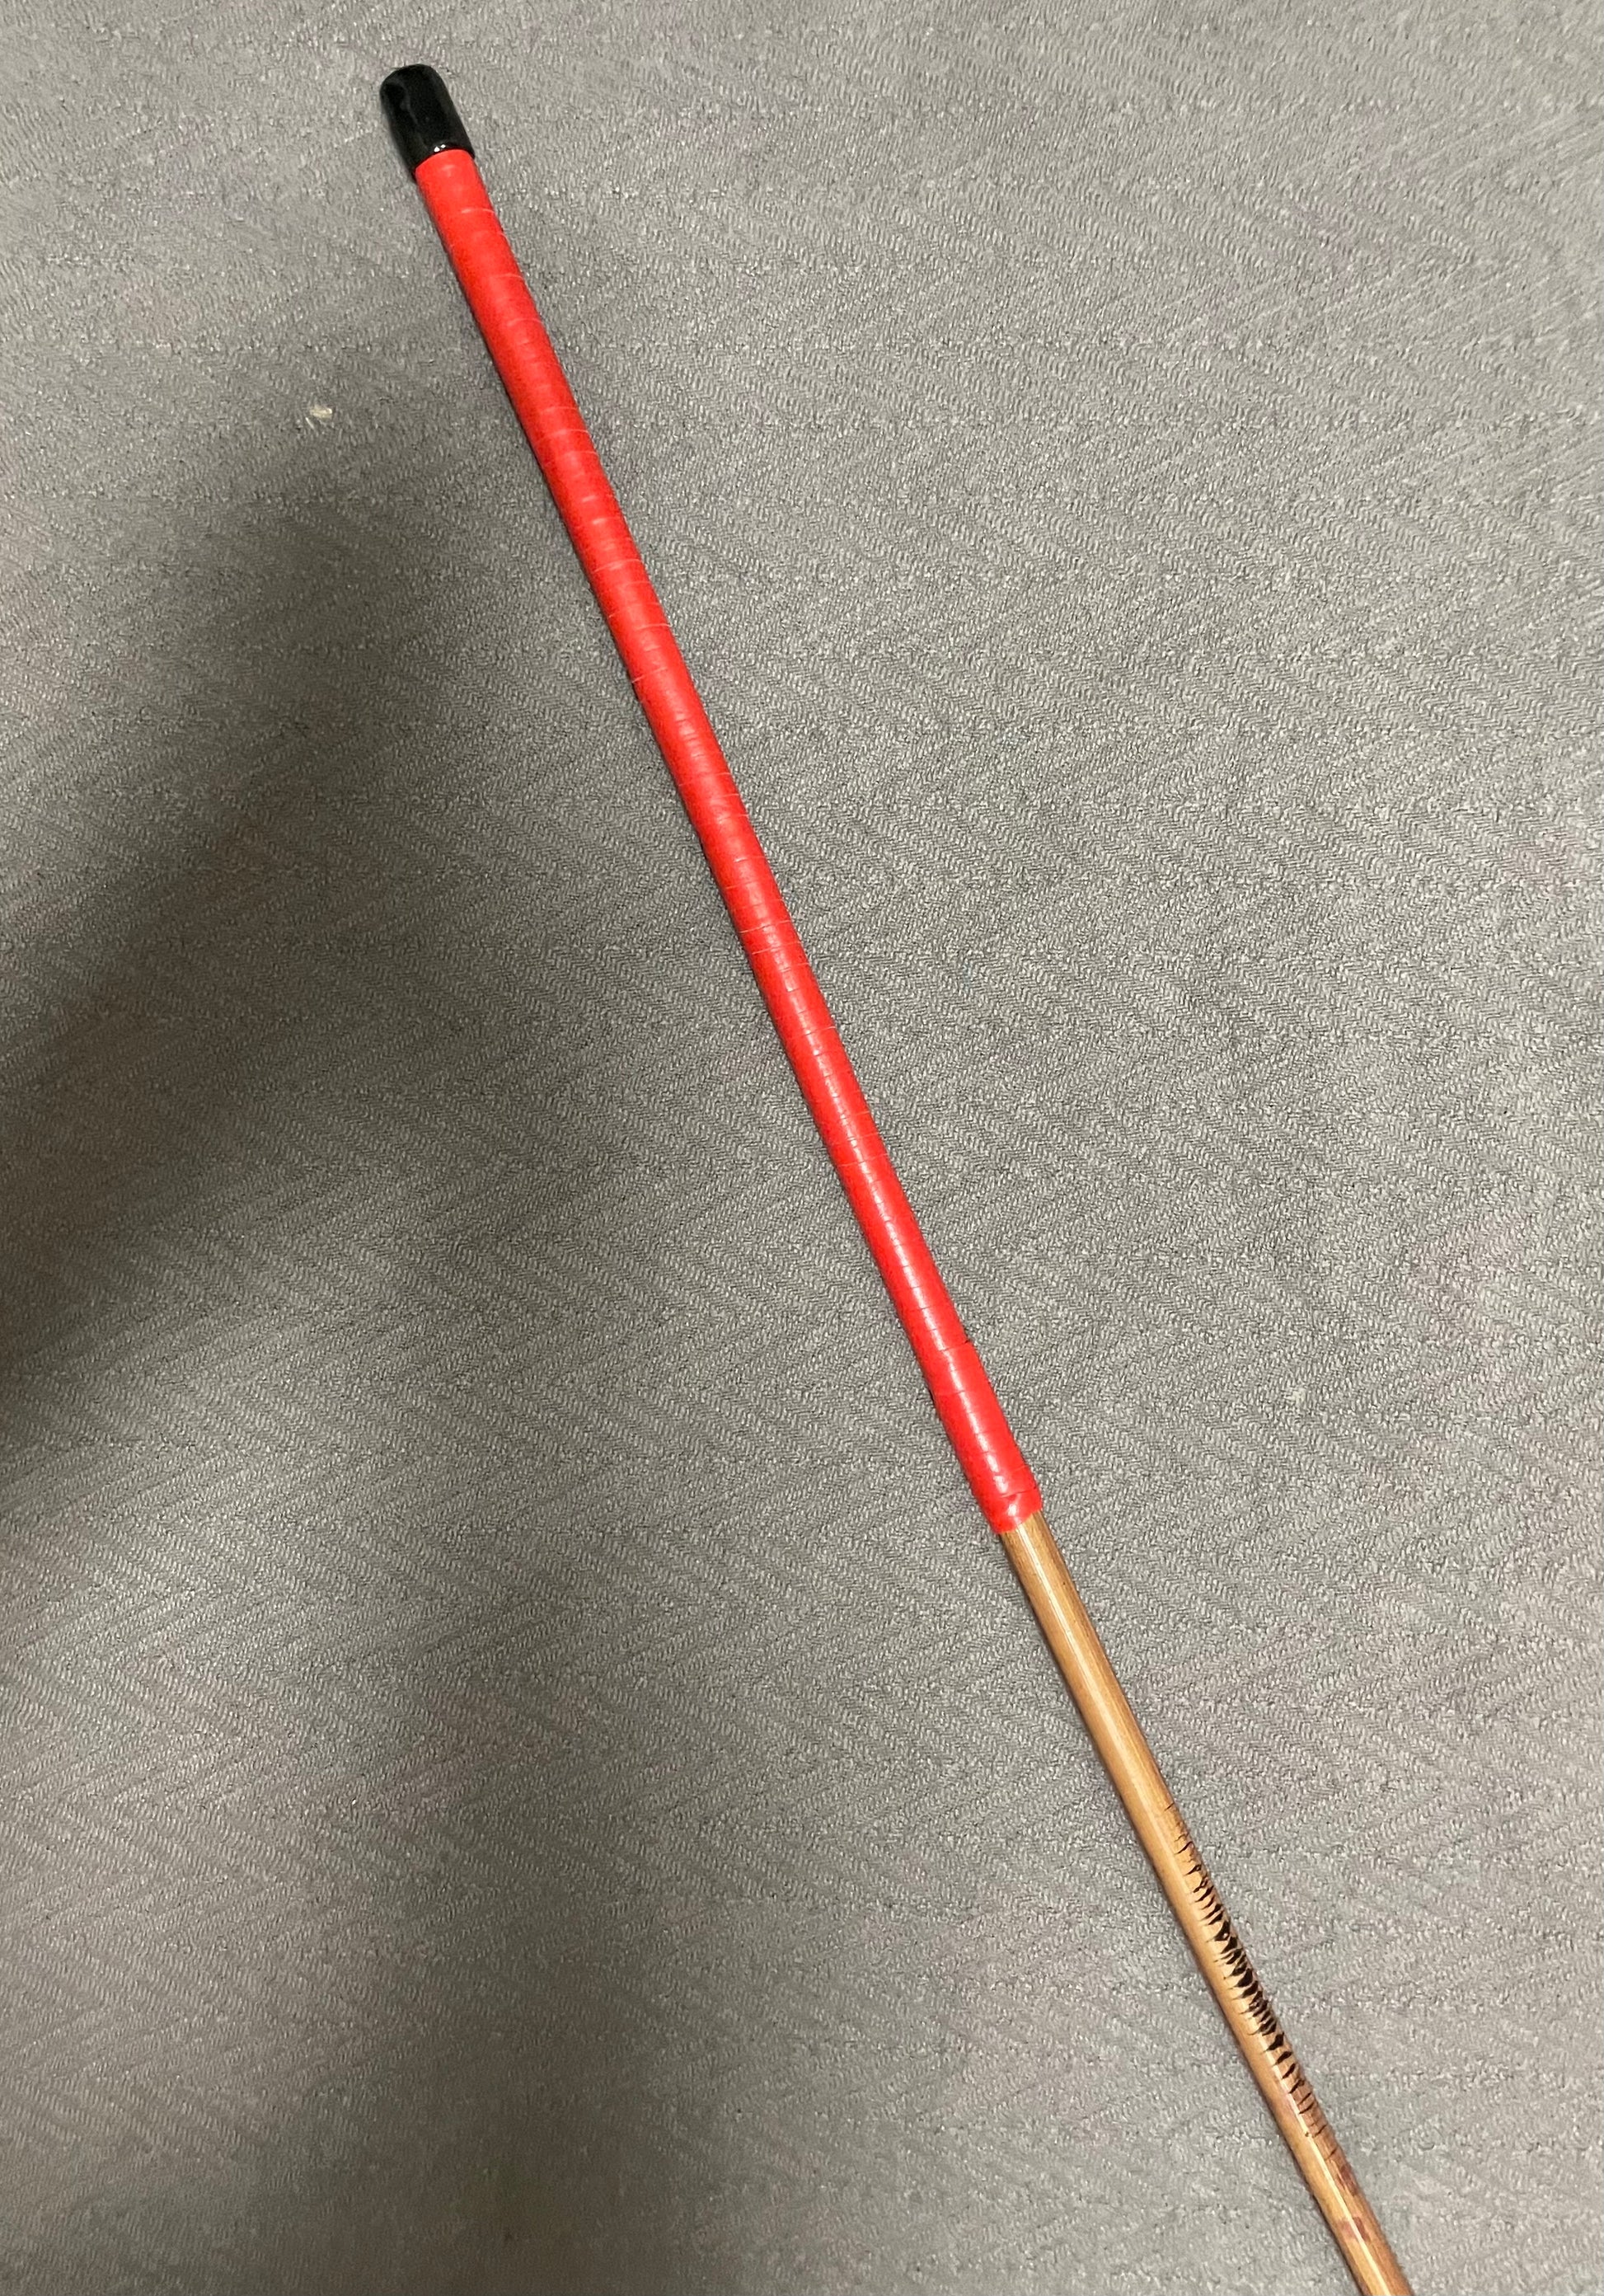 Singapore Prison Cane / Smoked Dragon Cane / Punishment Cane - 115 to 120 cms Length - Red Kangaroo Leather Handles